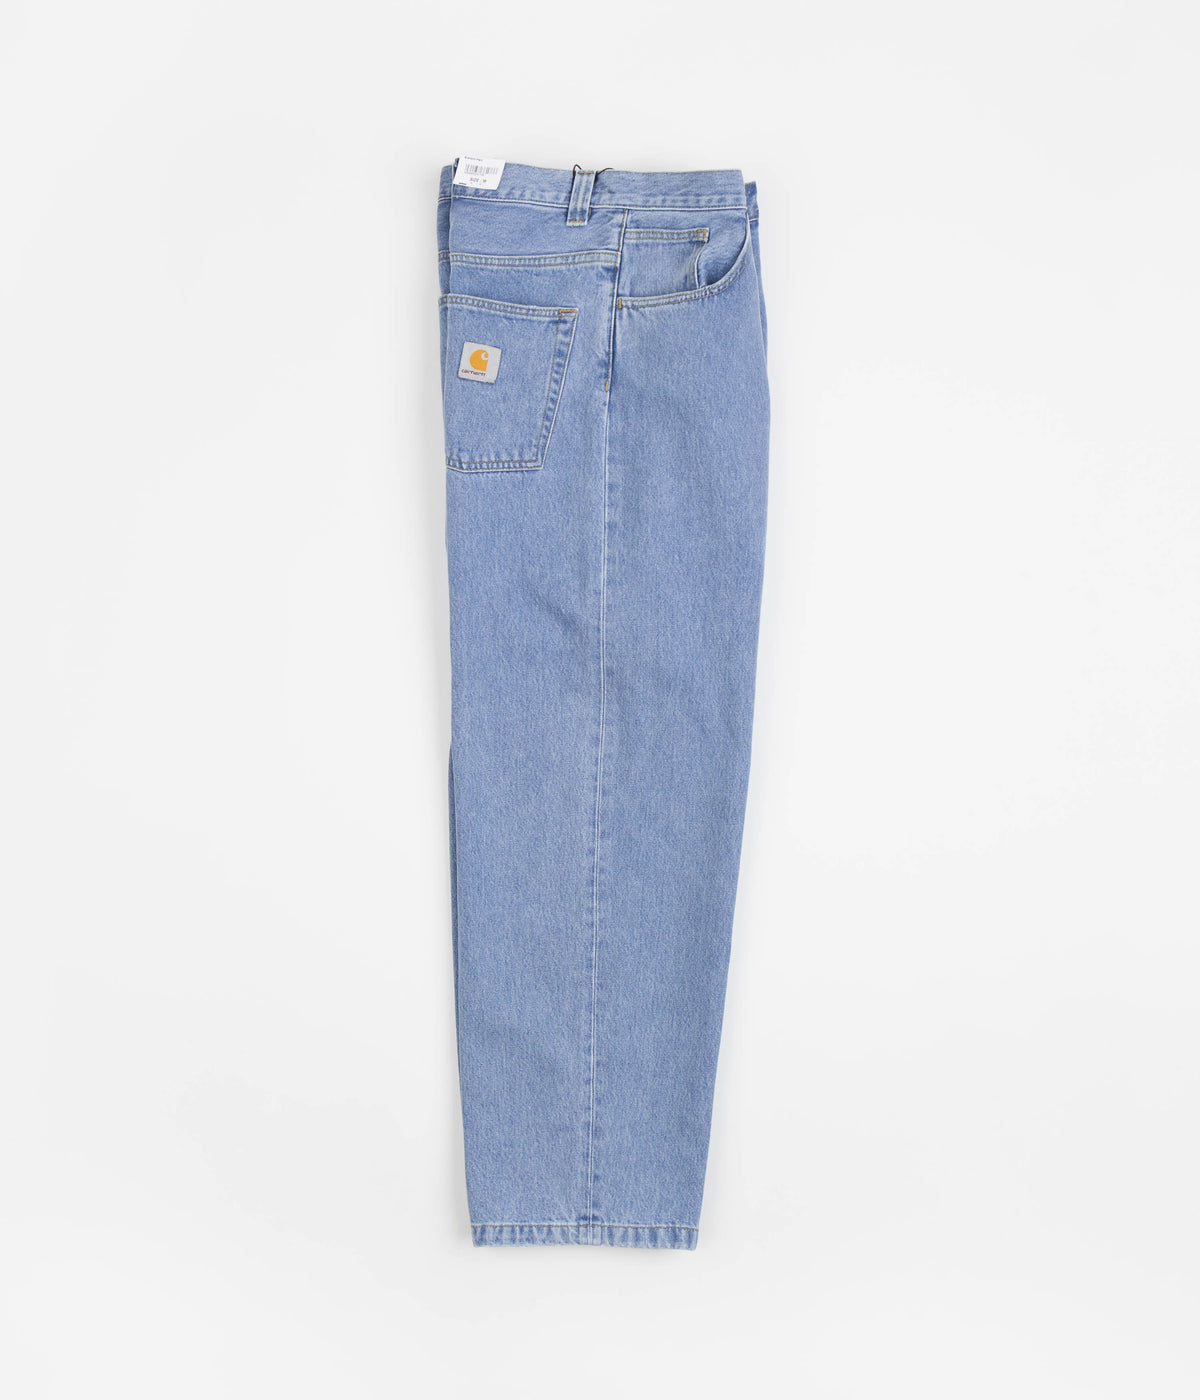 Carhartt womens pants original - Gem